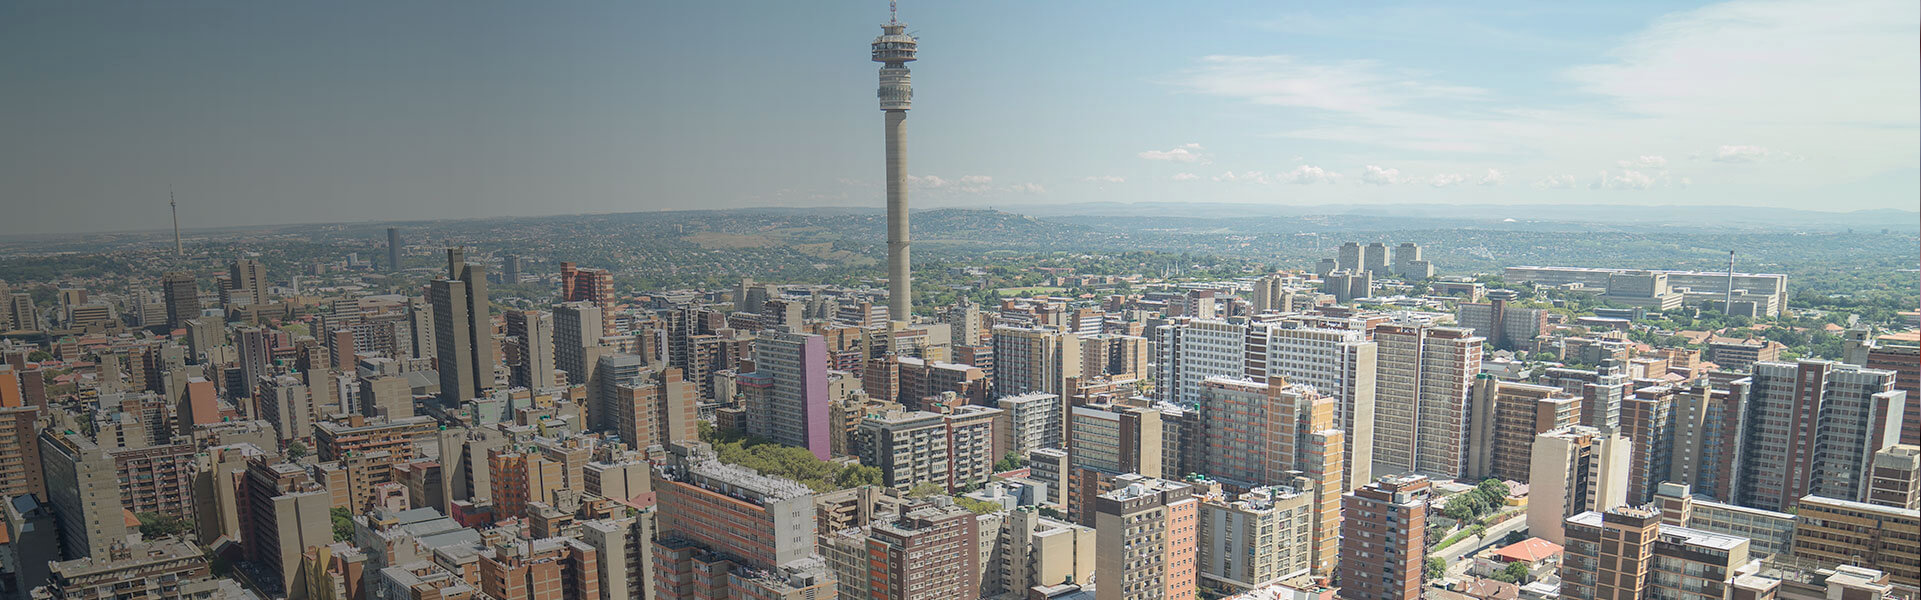 Image of the Hillbrow Tower and Johannesburg skyline